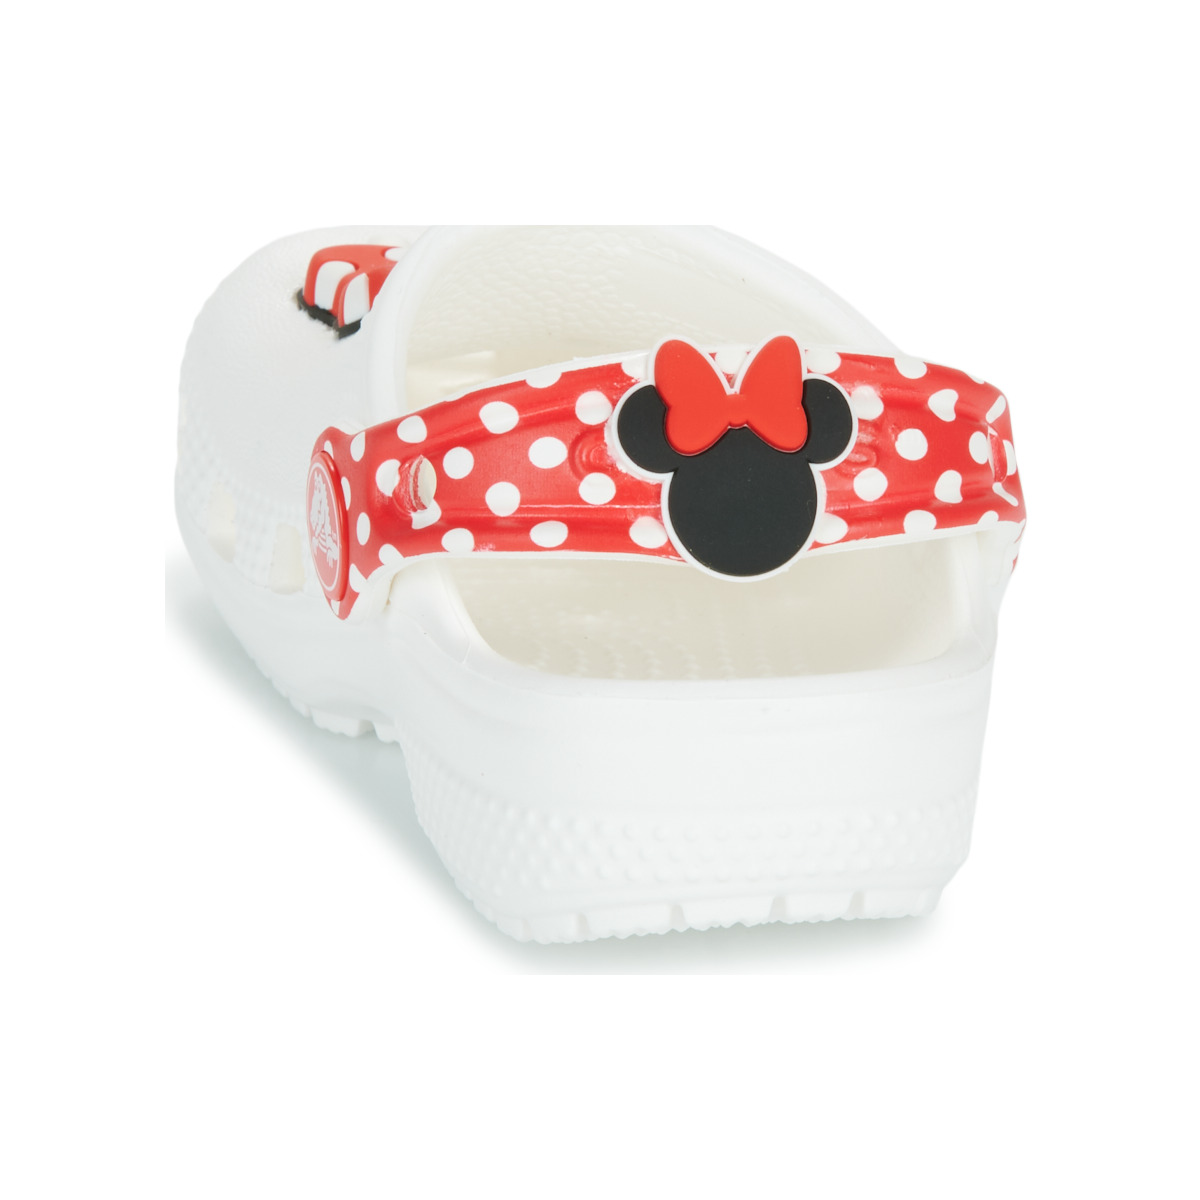 Crocs Blanc / Rouge Disney Minnie Mouse Cls Clg T kIhj5Xeh